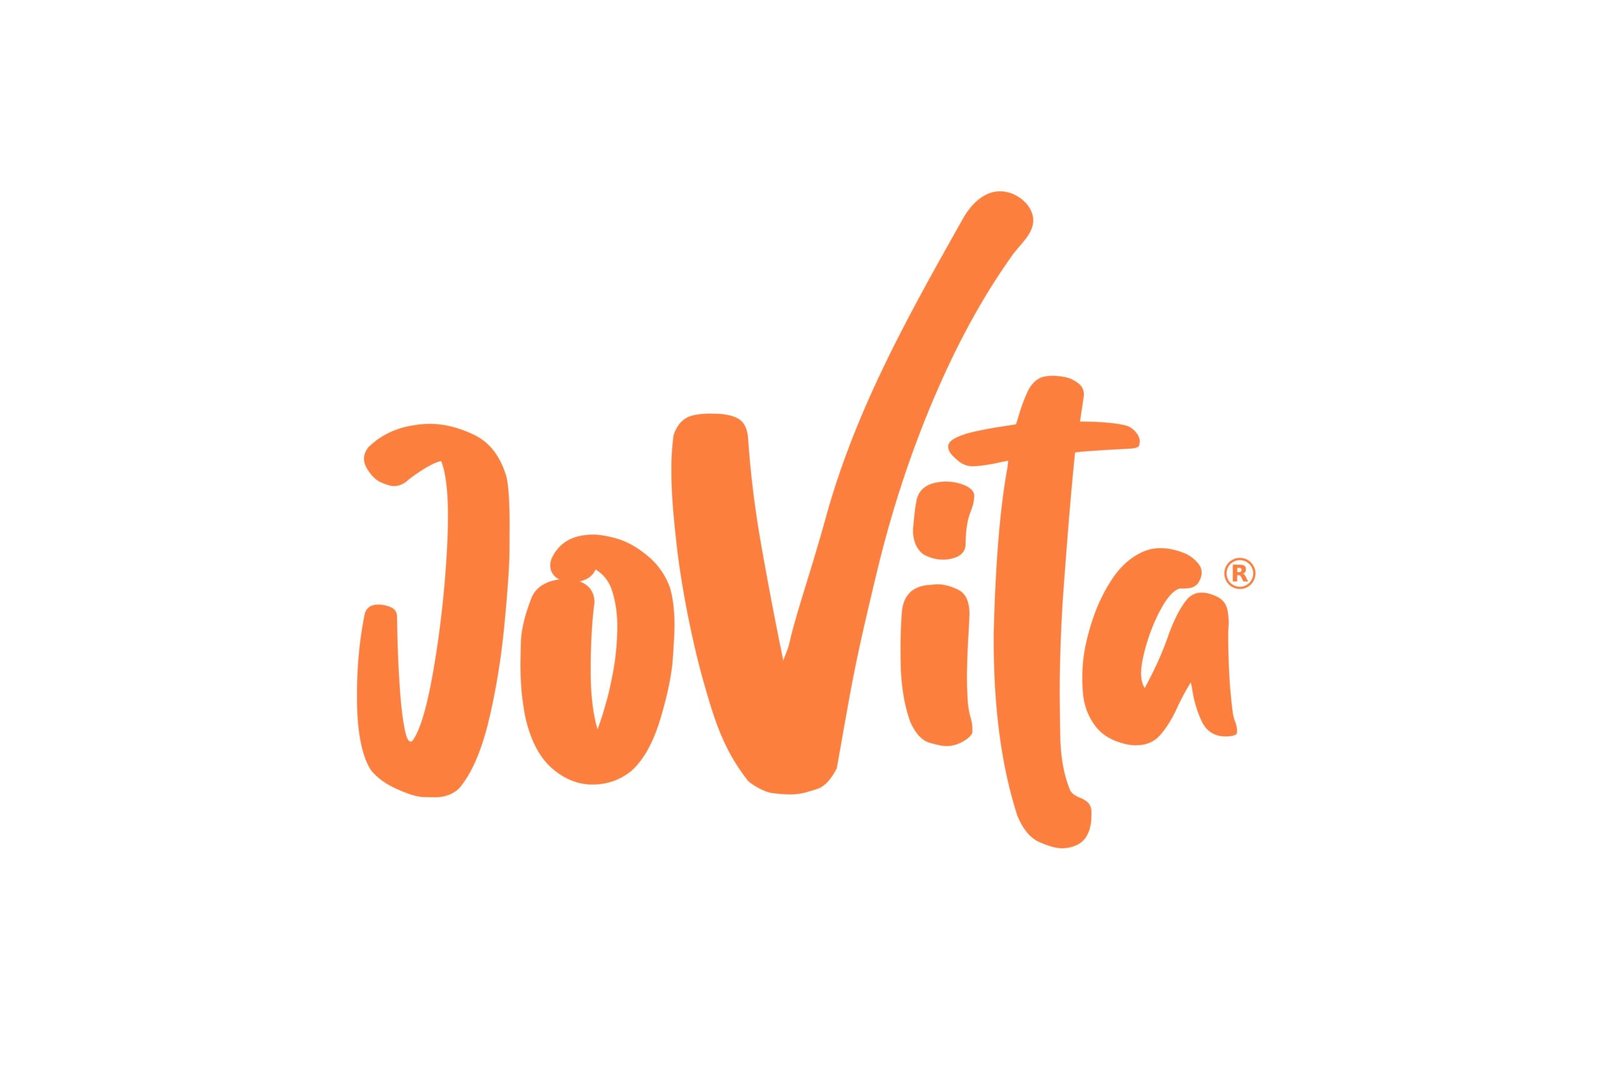 alt="Brand identity Design for Jovita Small Organic Product brand nested in USA"